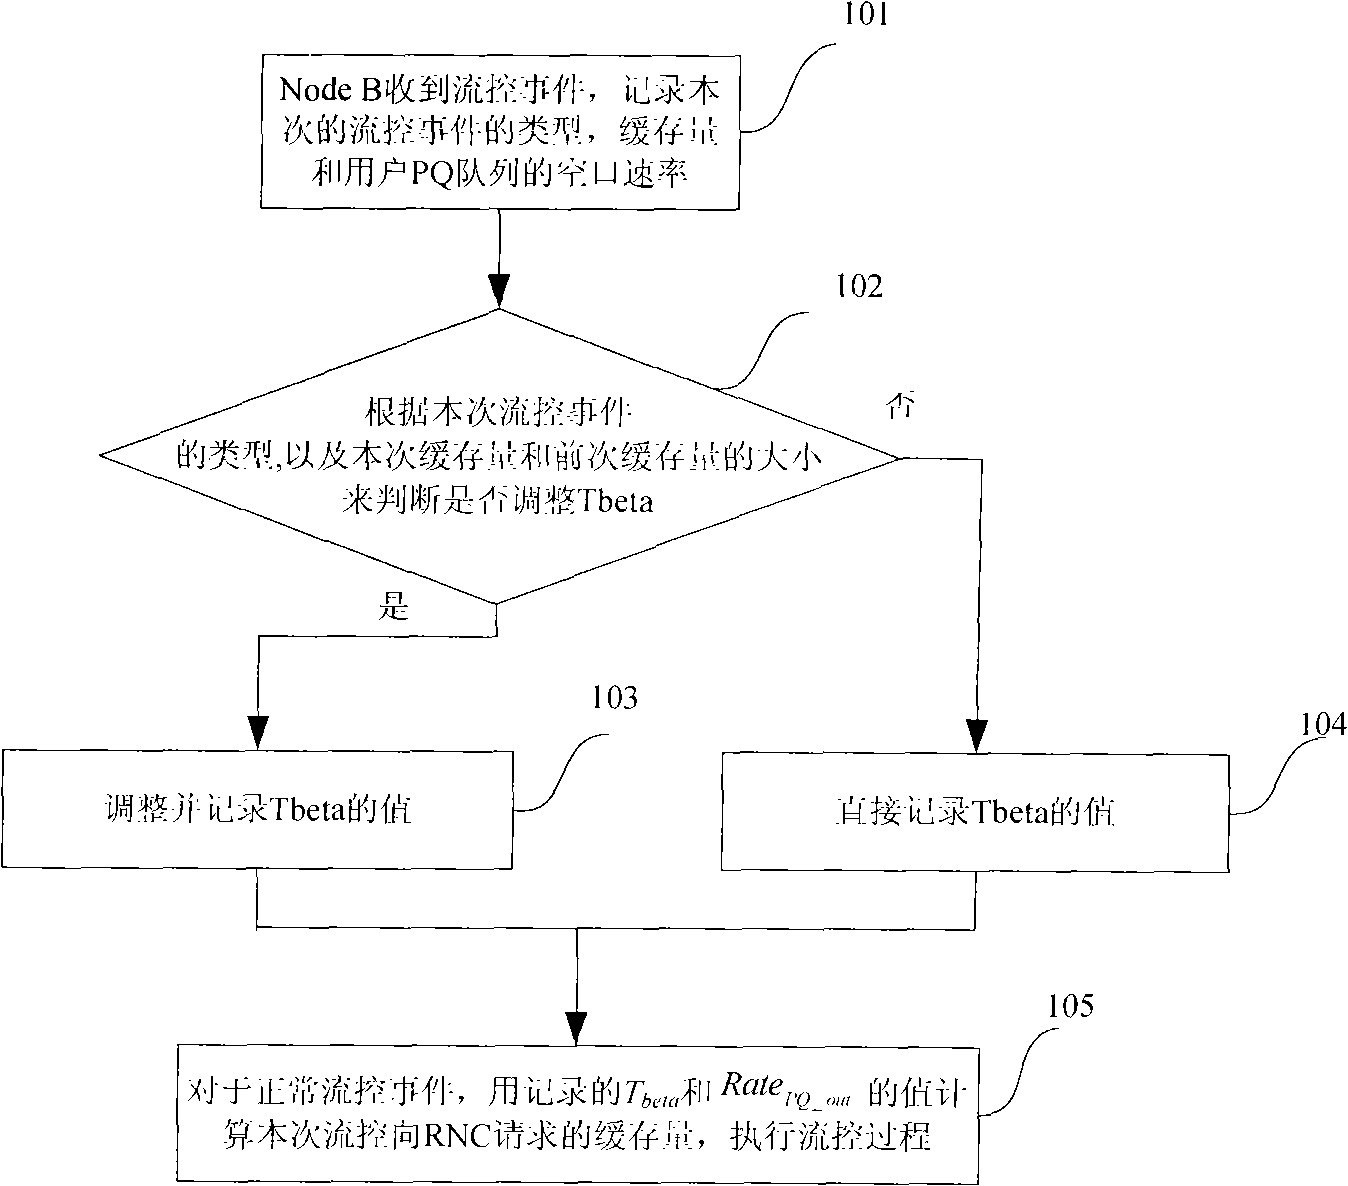 Flow control method for flow self-adaption modification of Iub port